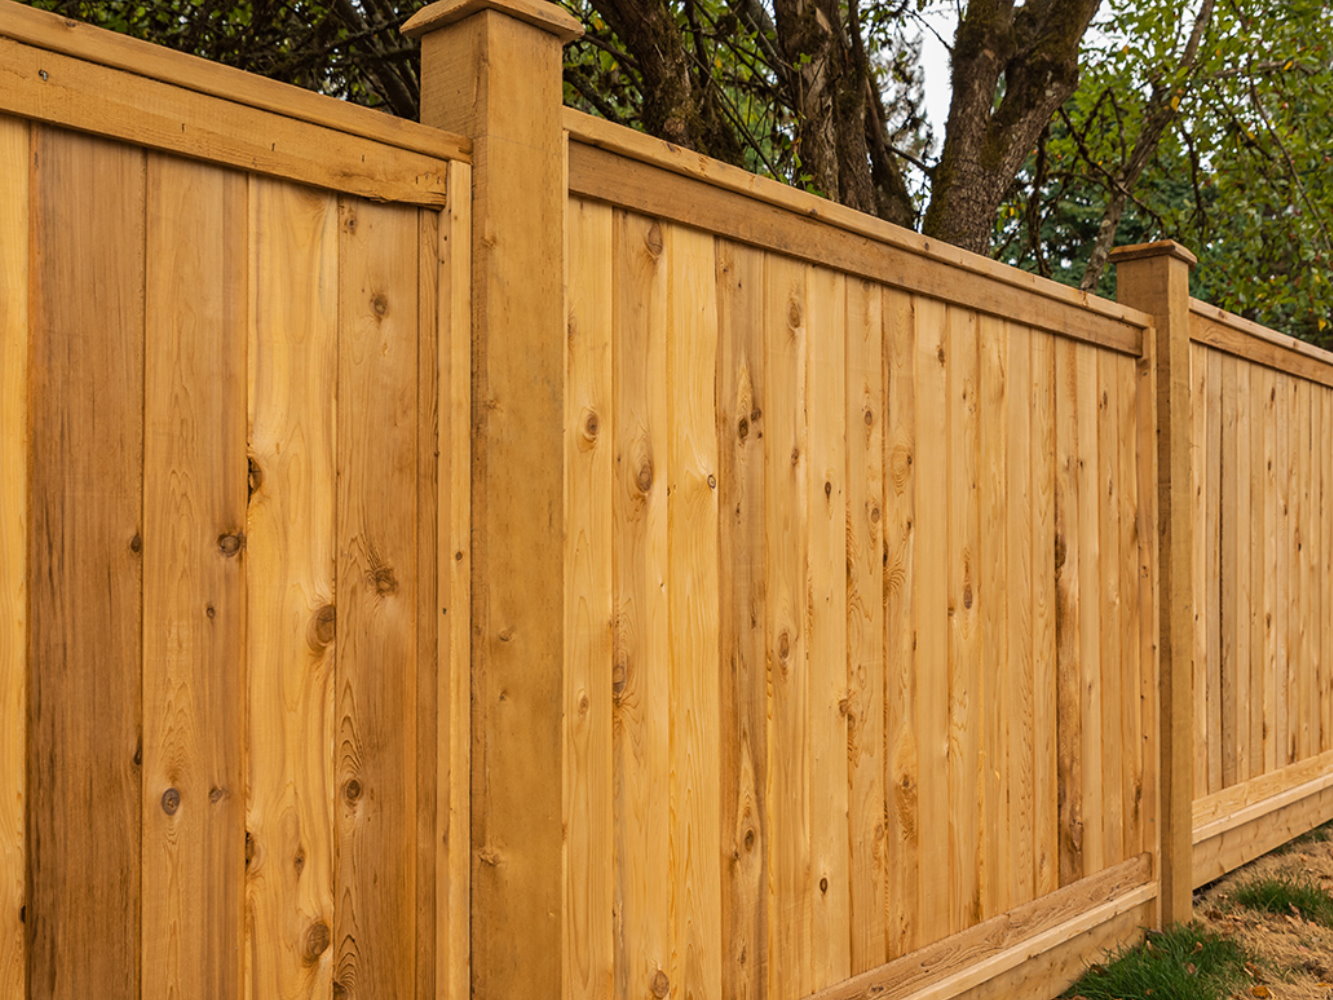 Ambrose GA cap and trim style wood fence